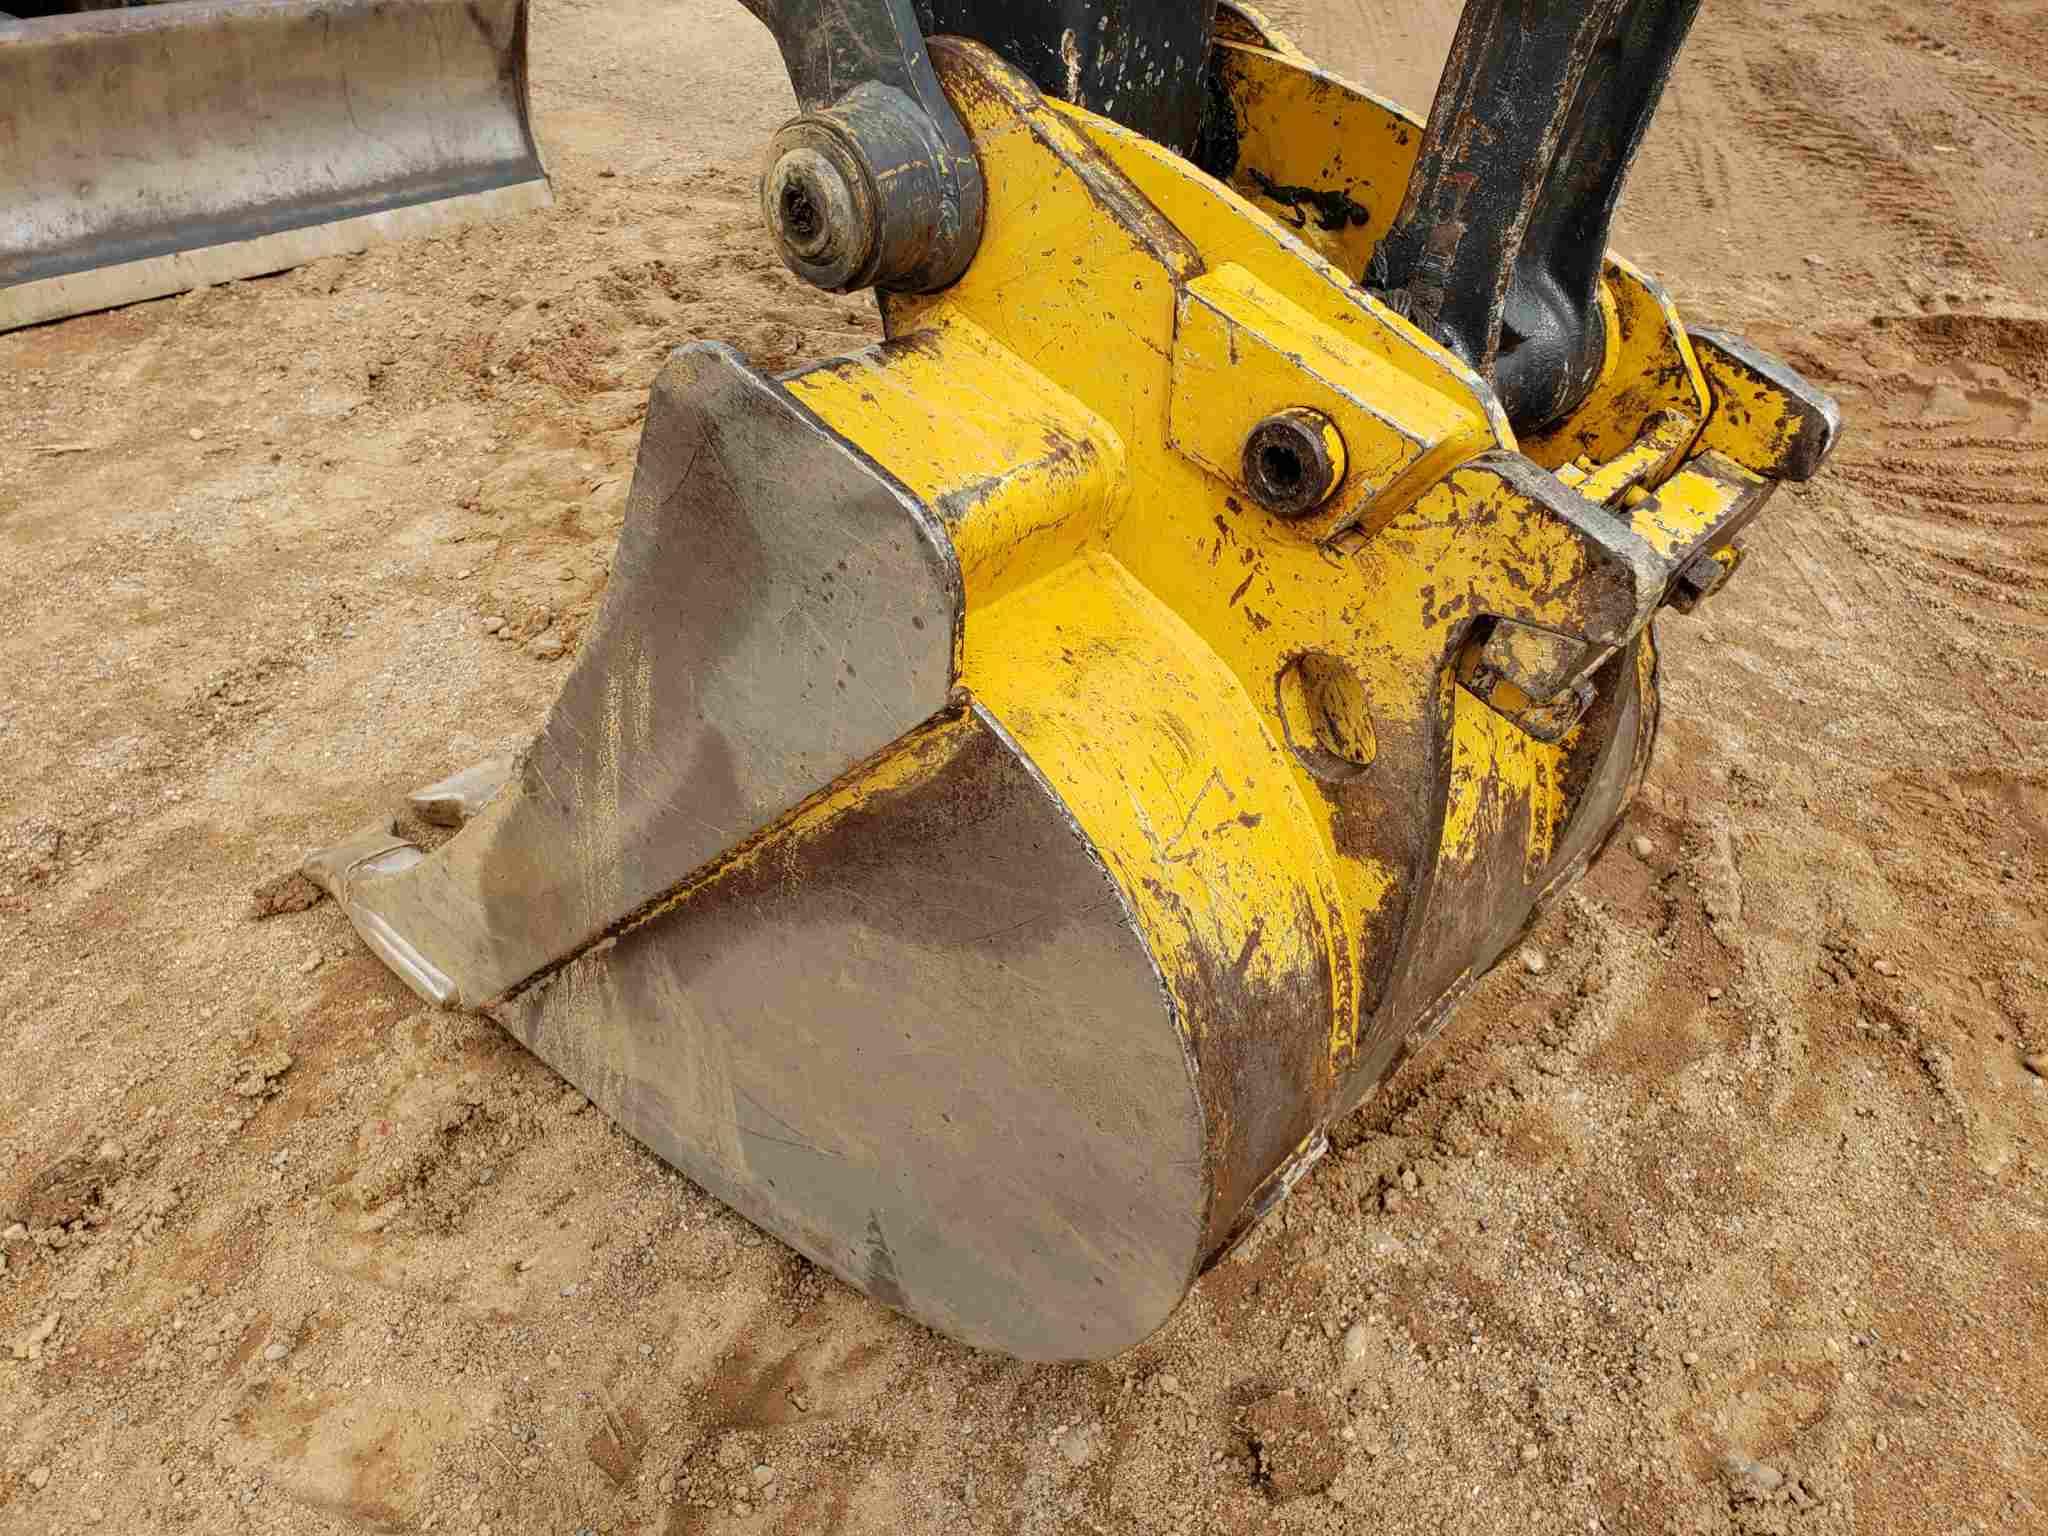 2016 Deere 60g Mini Excavator